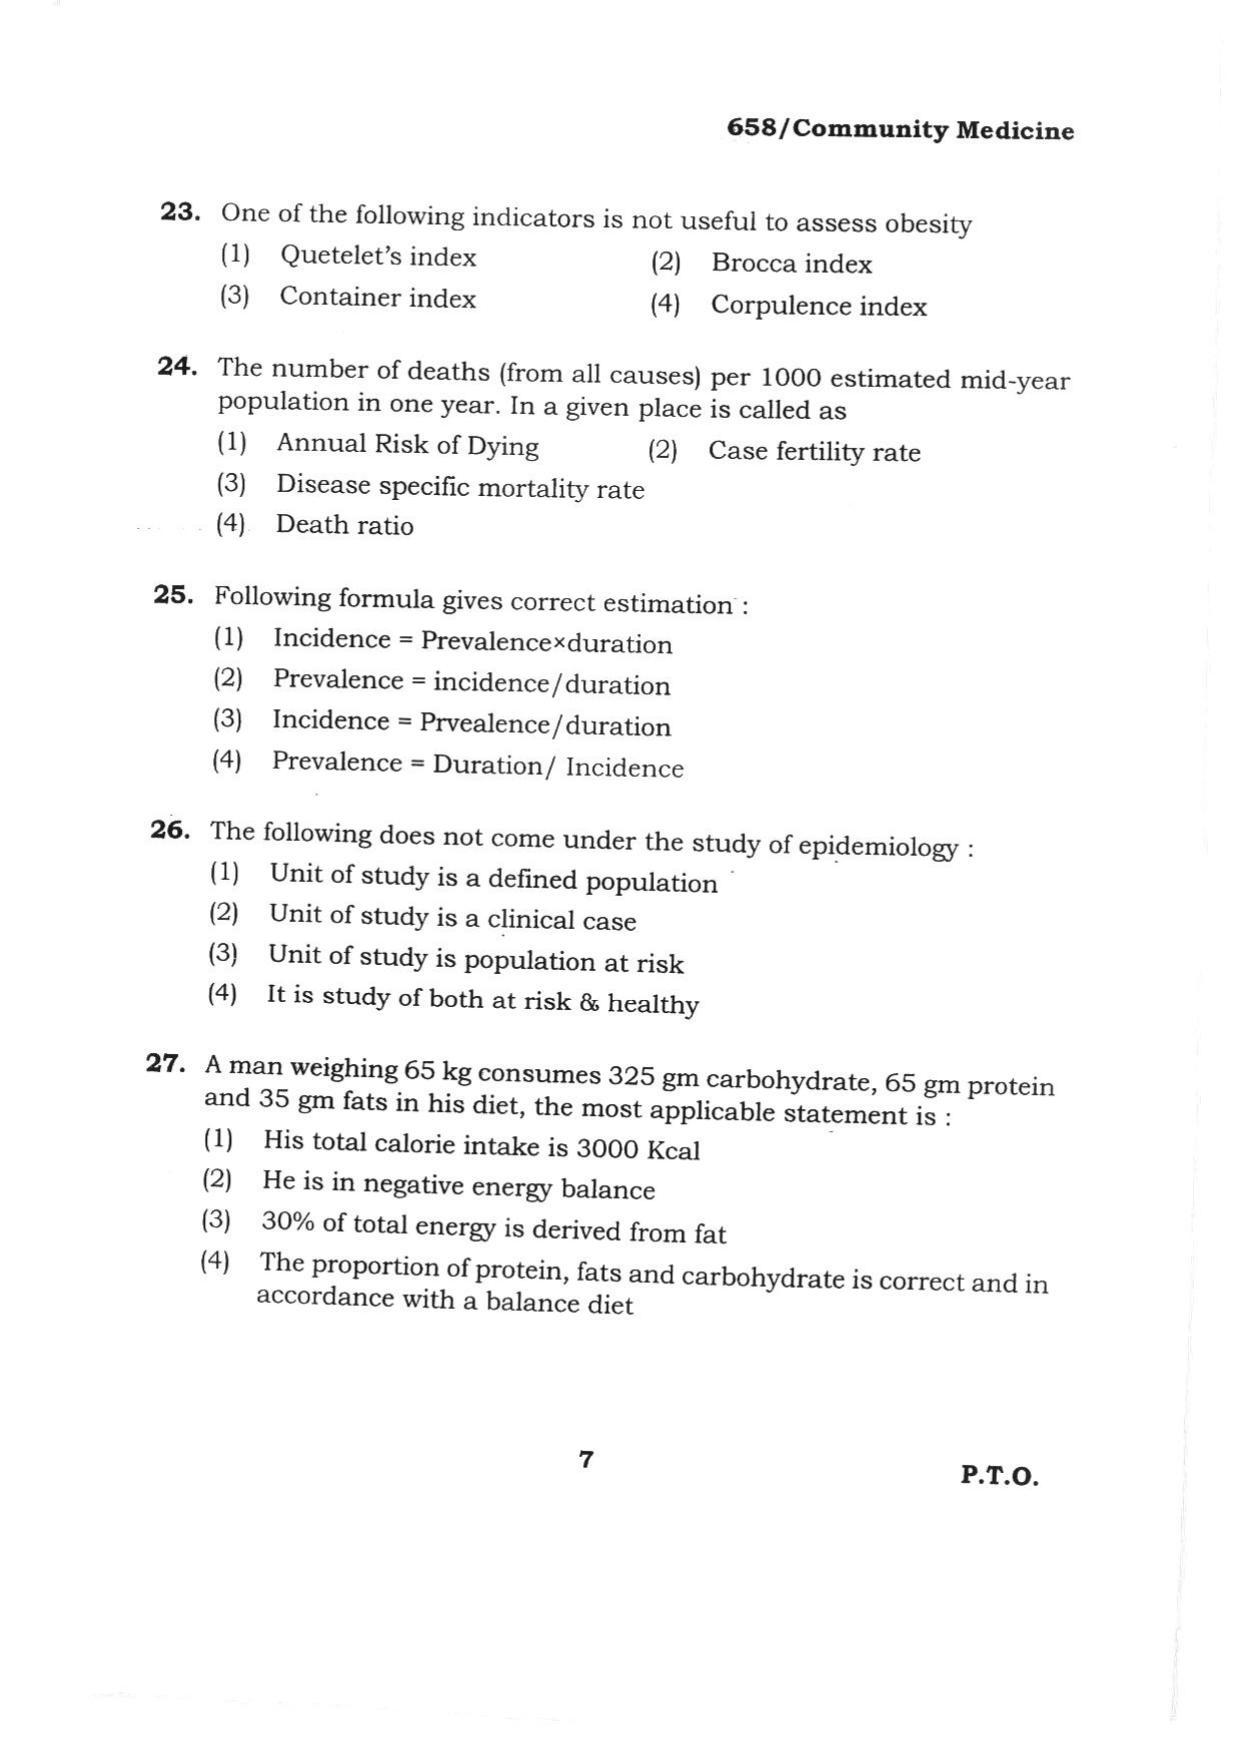 BHU RET COMMUNITY MEDICINE 2015 Question Paper - Page 7